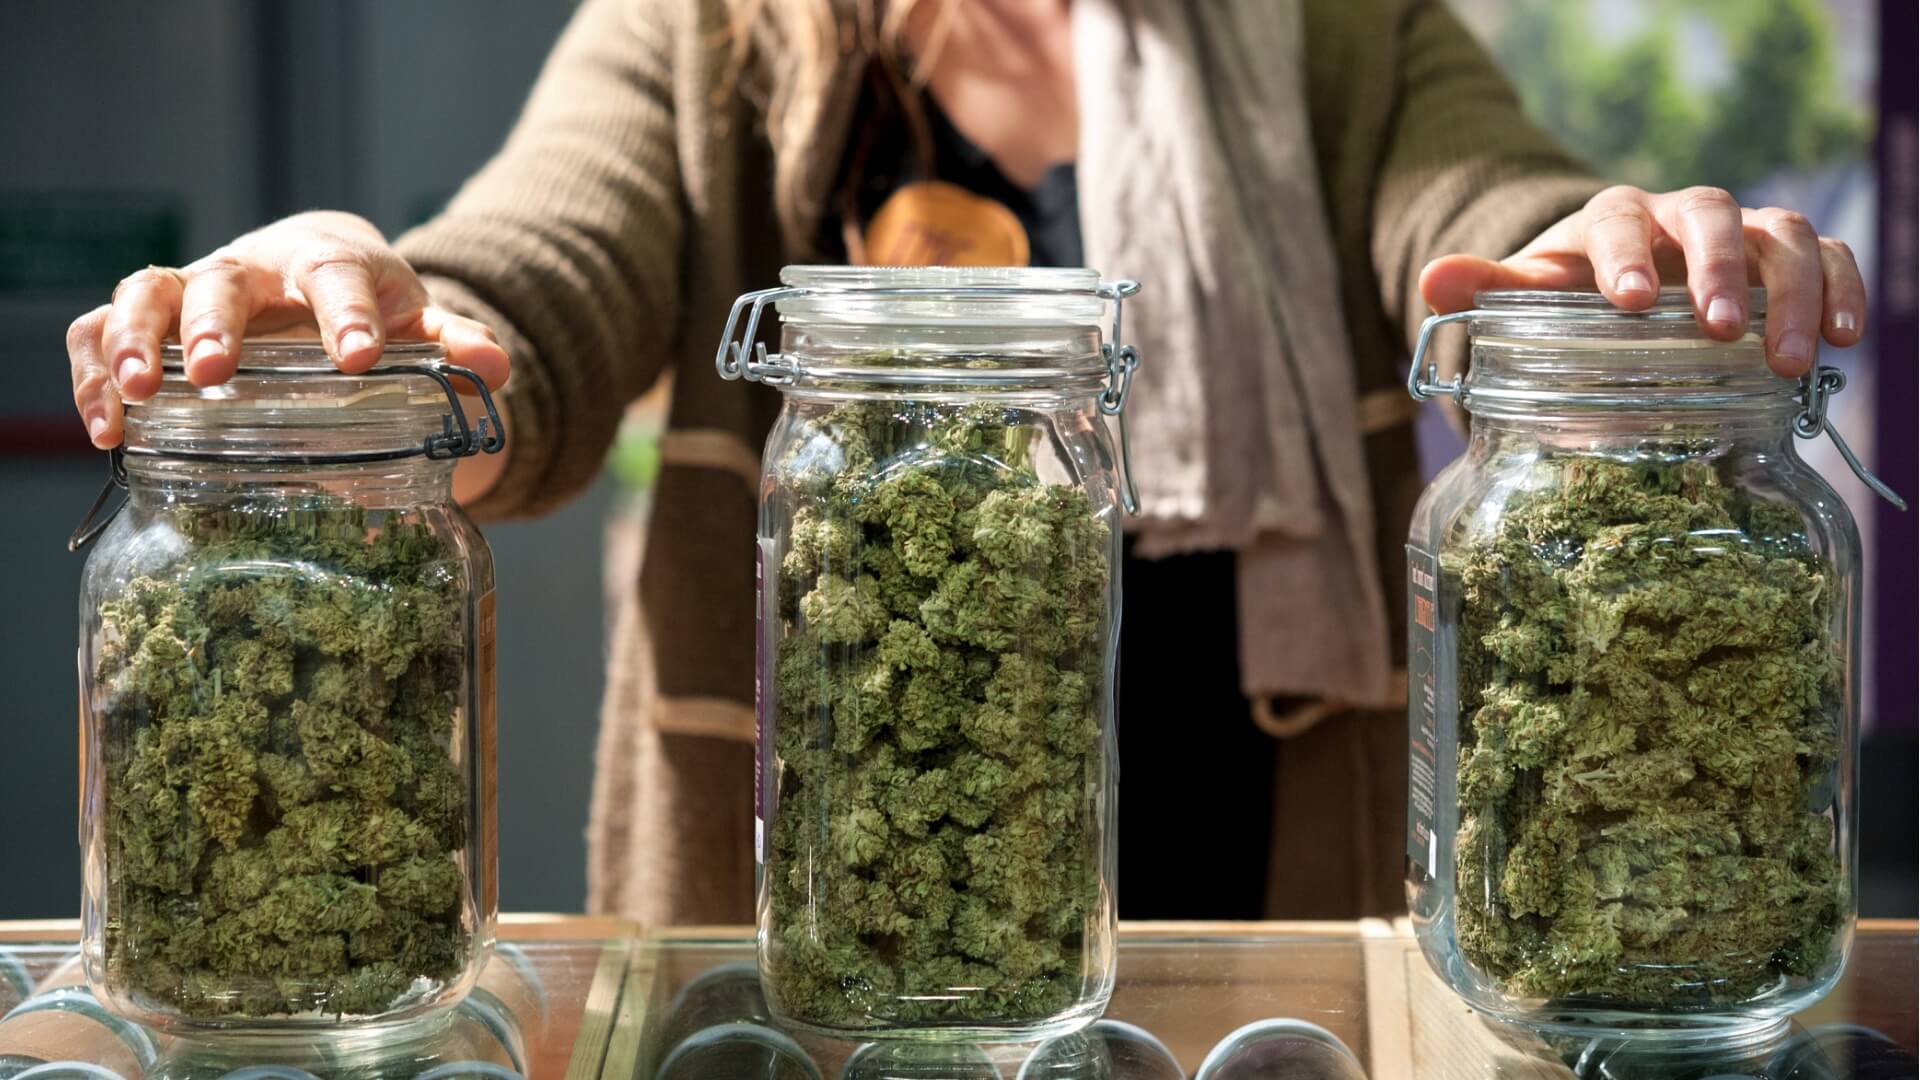 Three large glass jars full of cannabis sativa buds